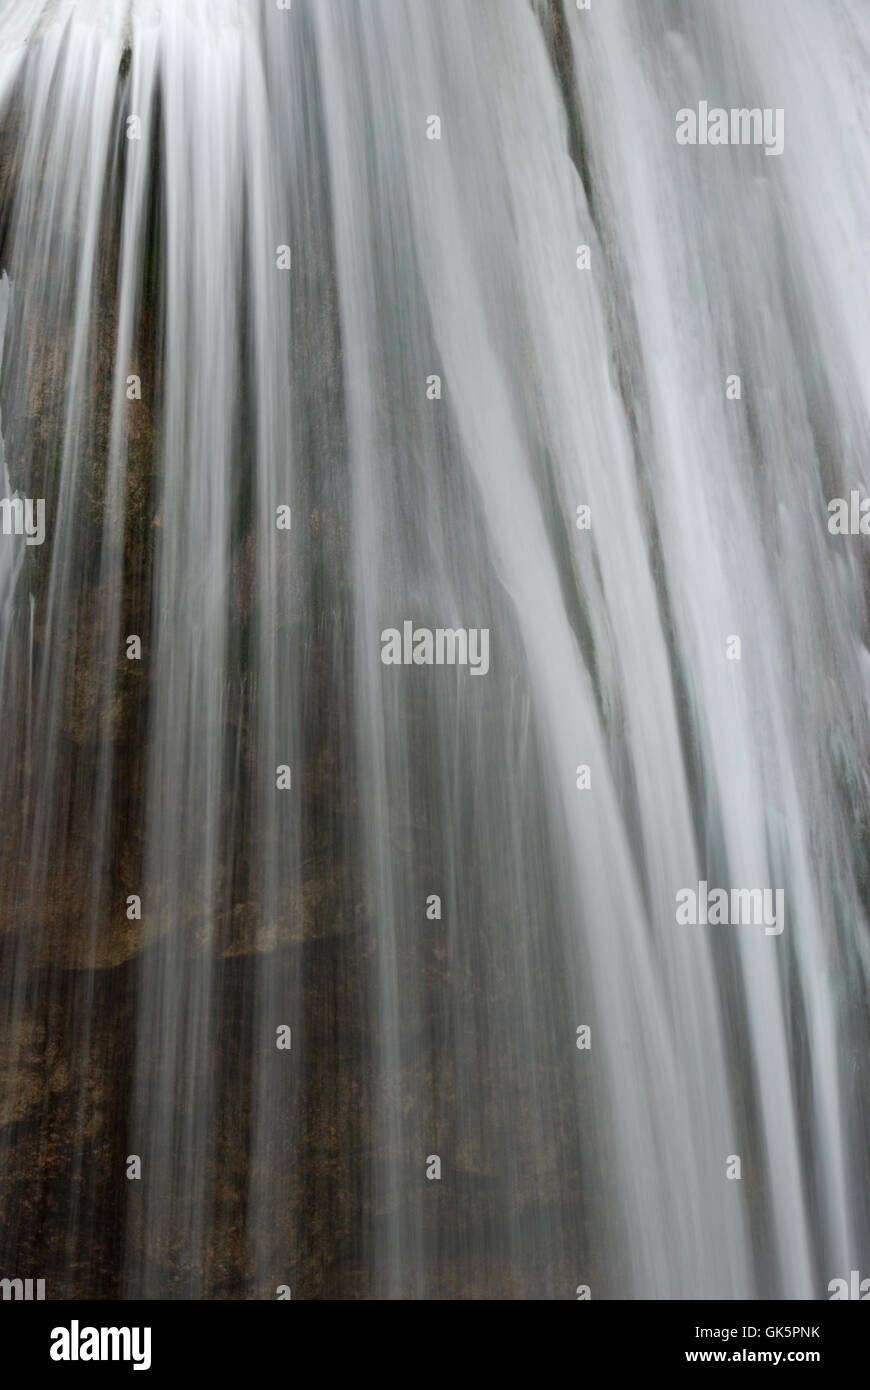 Wasserfall Hintergrund Stockfoto